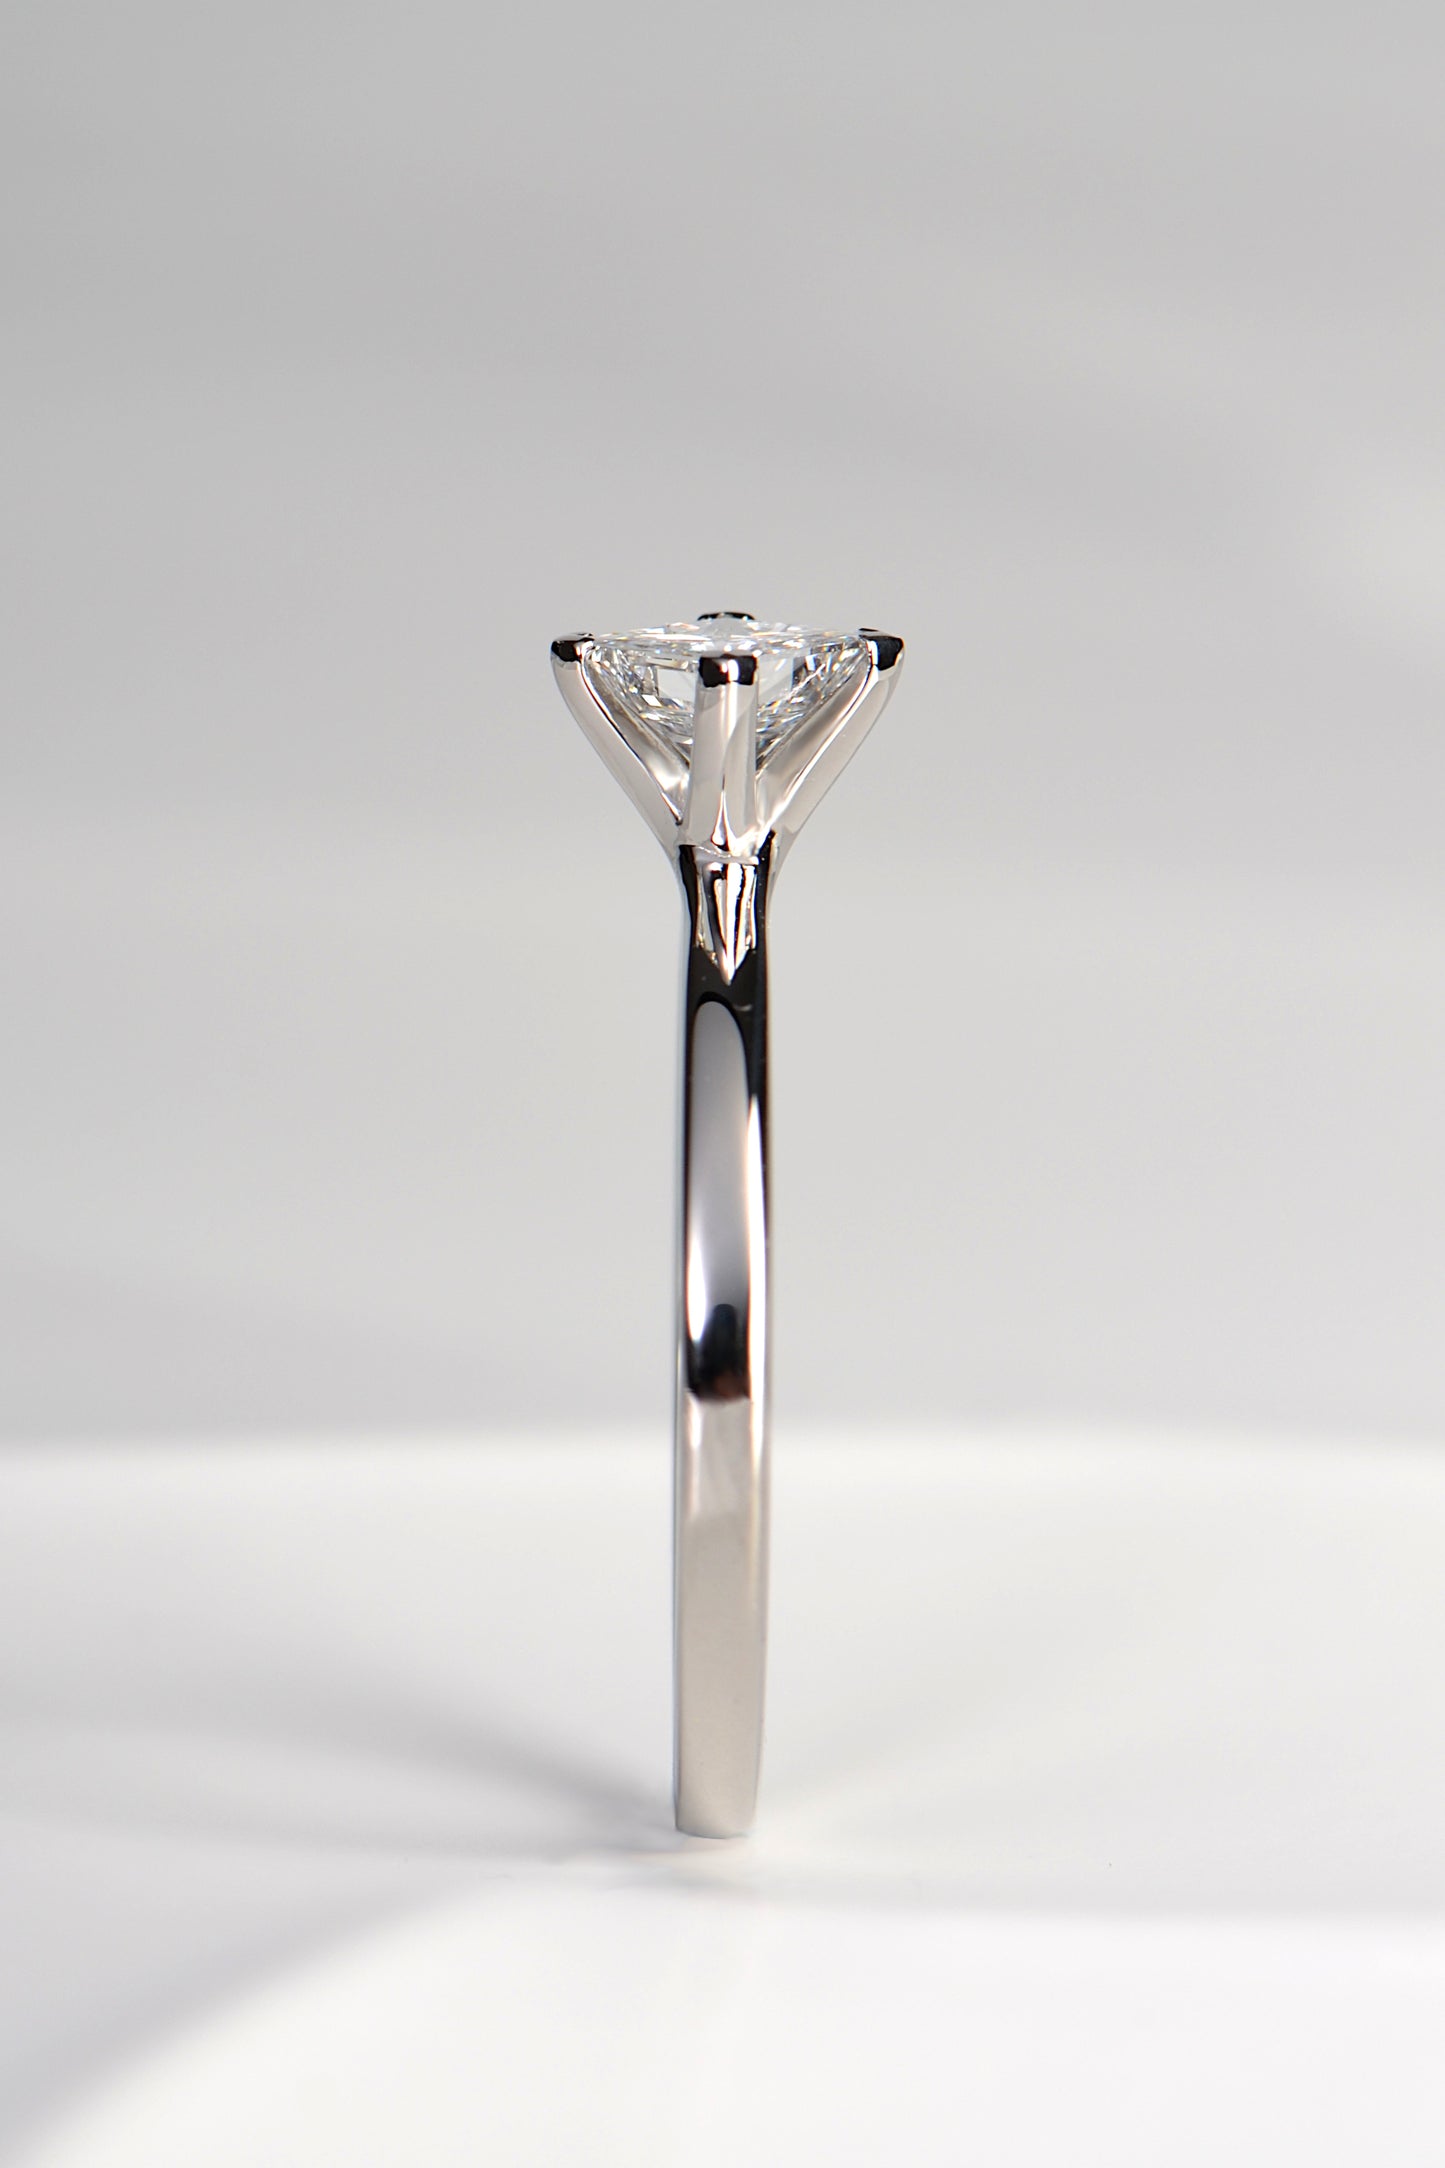 Platinum princess cut solitaire diamond engagement ring